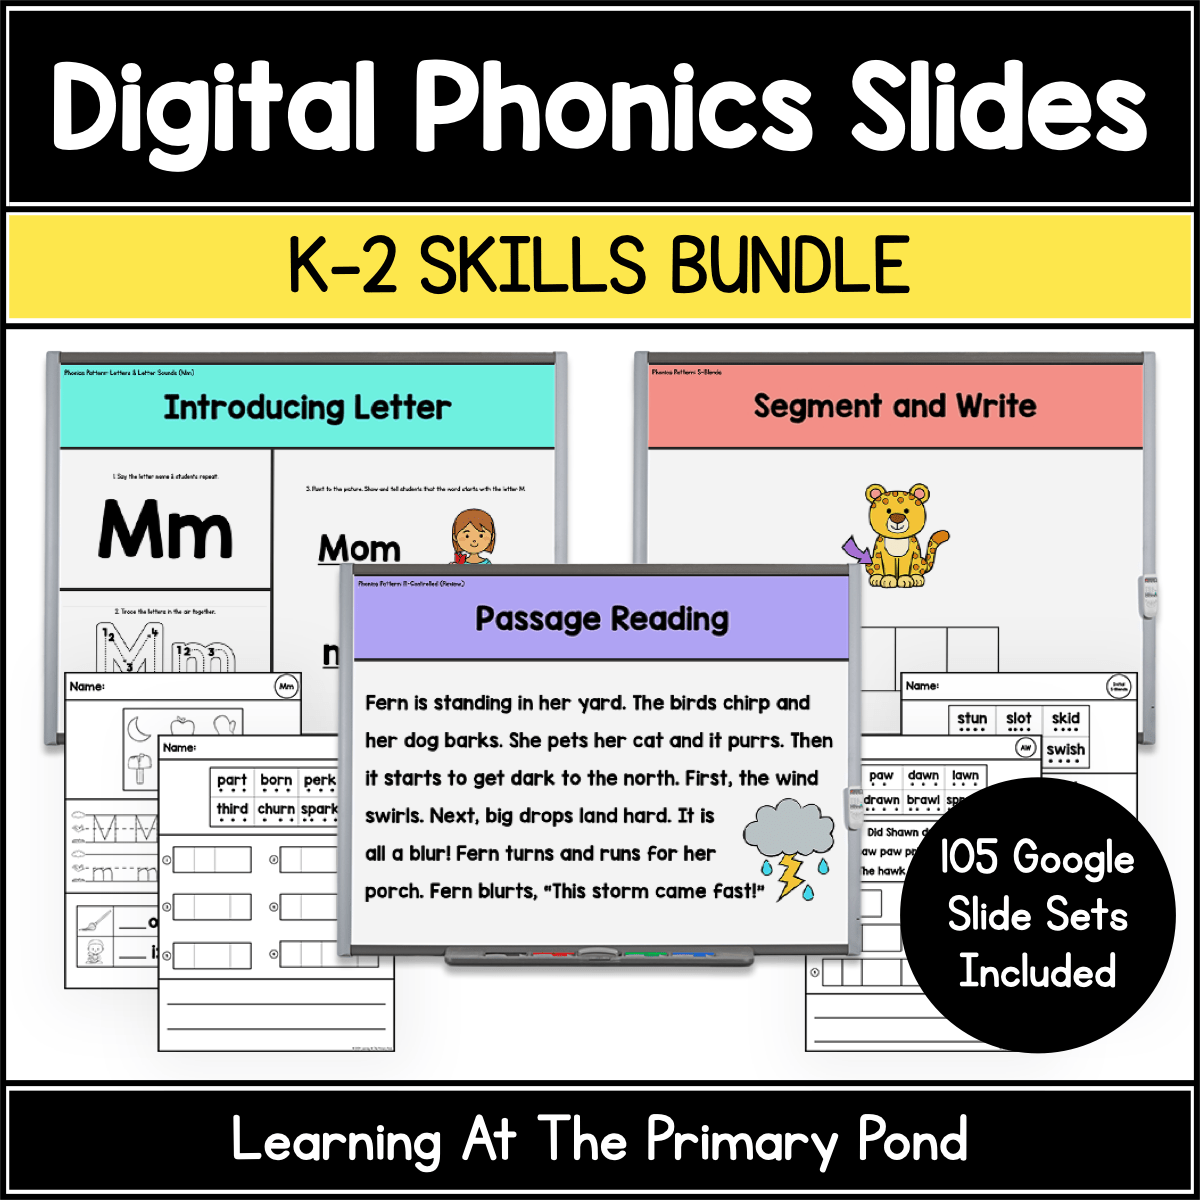 Phonics Slides Digital Resources | Google Slides for K, 1st, 2nd Phonics Skills - Learning at the Primary Pond